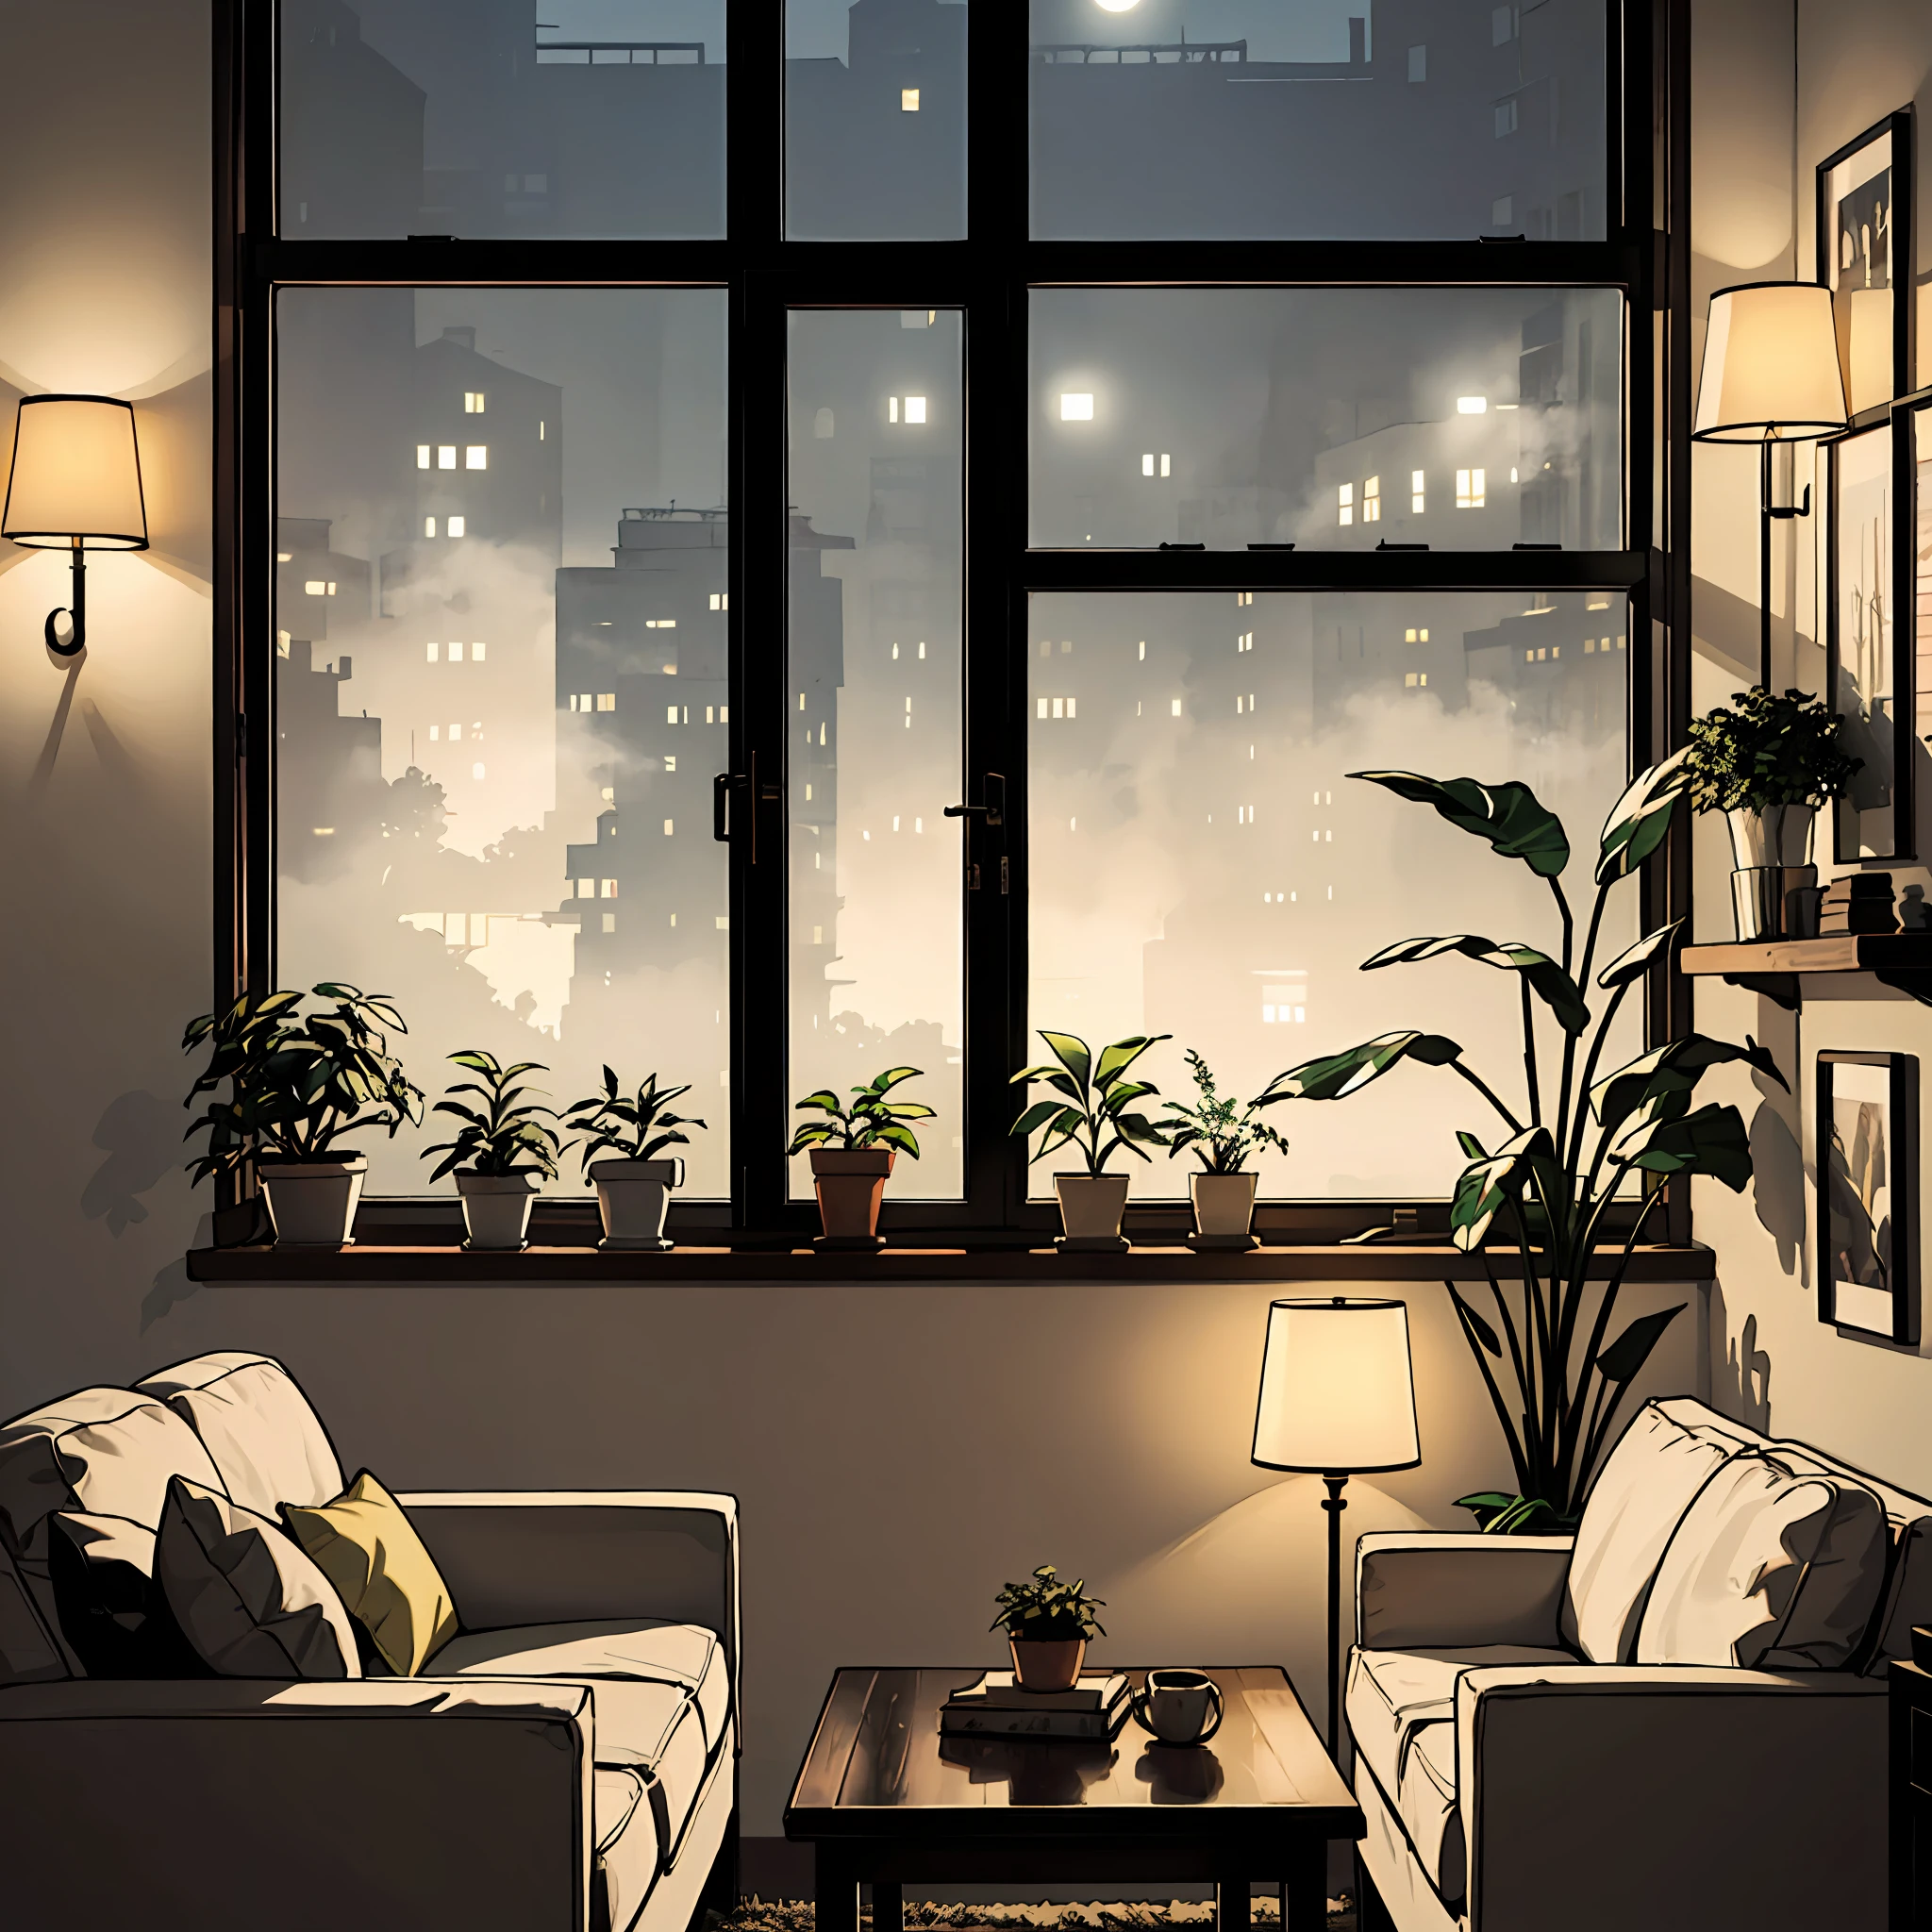 midcentury modern living room dimly lit with dark ฝนตก evening outside, (foggy ฝนตก evening:1.2), แปซิฟิกตะวันตกเฉียงเหนือ, (แสงสลัว:1.4), (แสงอารมณ์:1.2), พืช, large พืช, ฝนตก, สัตว์ประหลาด, many พืช, (หน้าต่างมีหมอก:1.2), ผลงานชิ้นเอก, คุณภาพดีที่สุด, ชั่วโมงพลบค่ำ, (ตอนกลางคืน:1.4), ฝนตก evening, หลังพระอาทิตย์ตก, --อัตโนมัติ